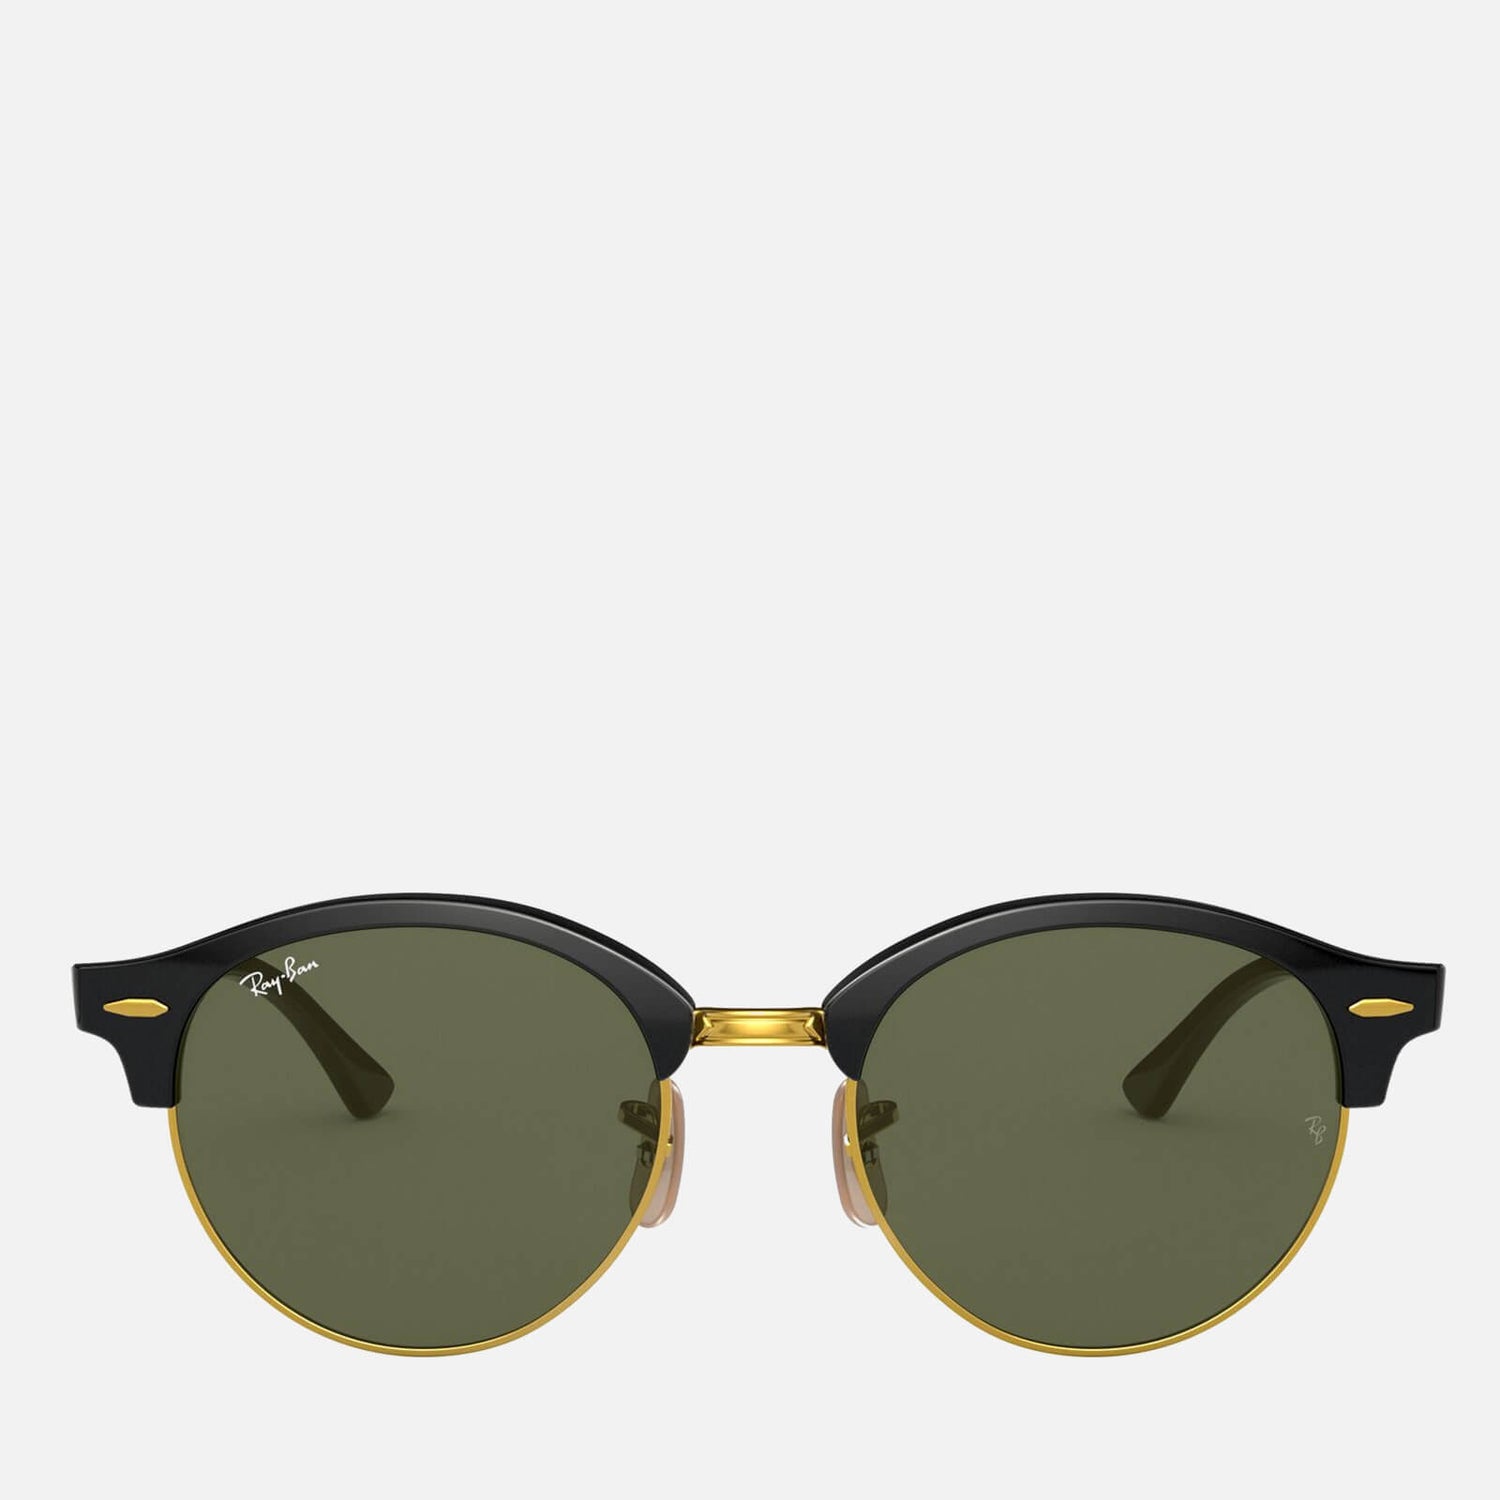 Ray-Ban Clubround Classic Sunglasses - Black